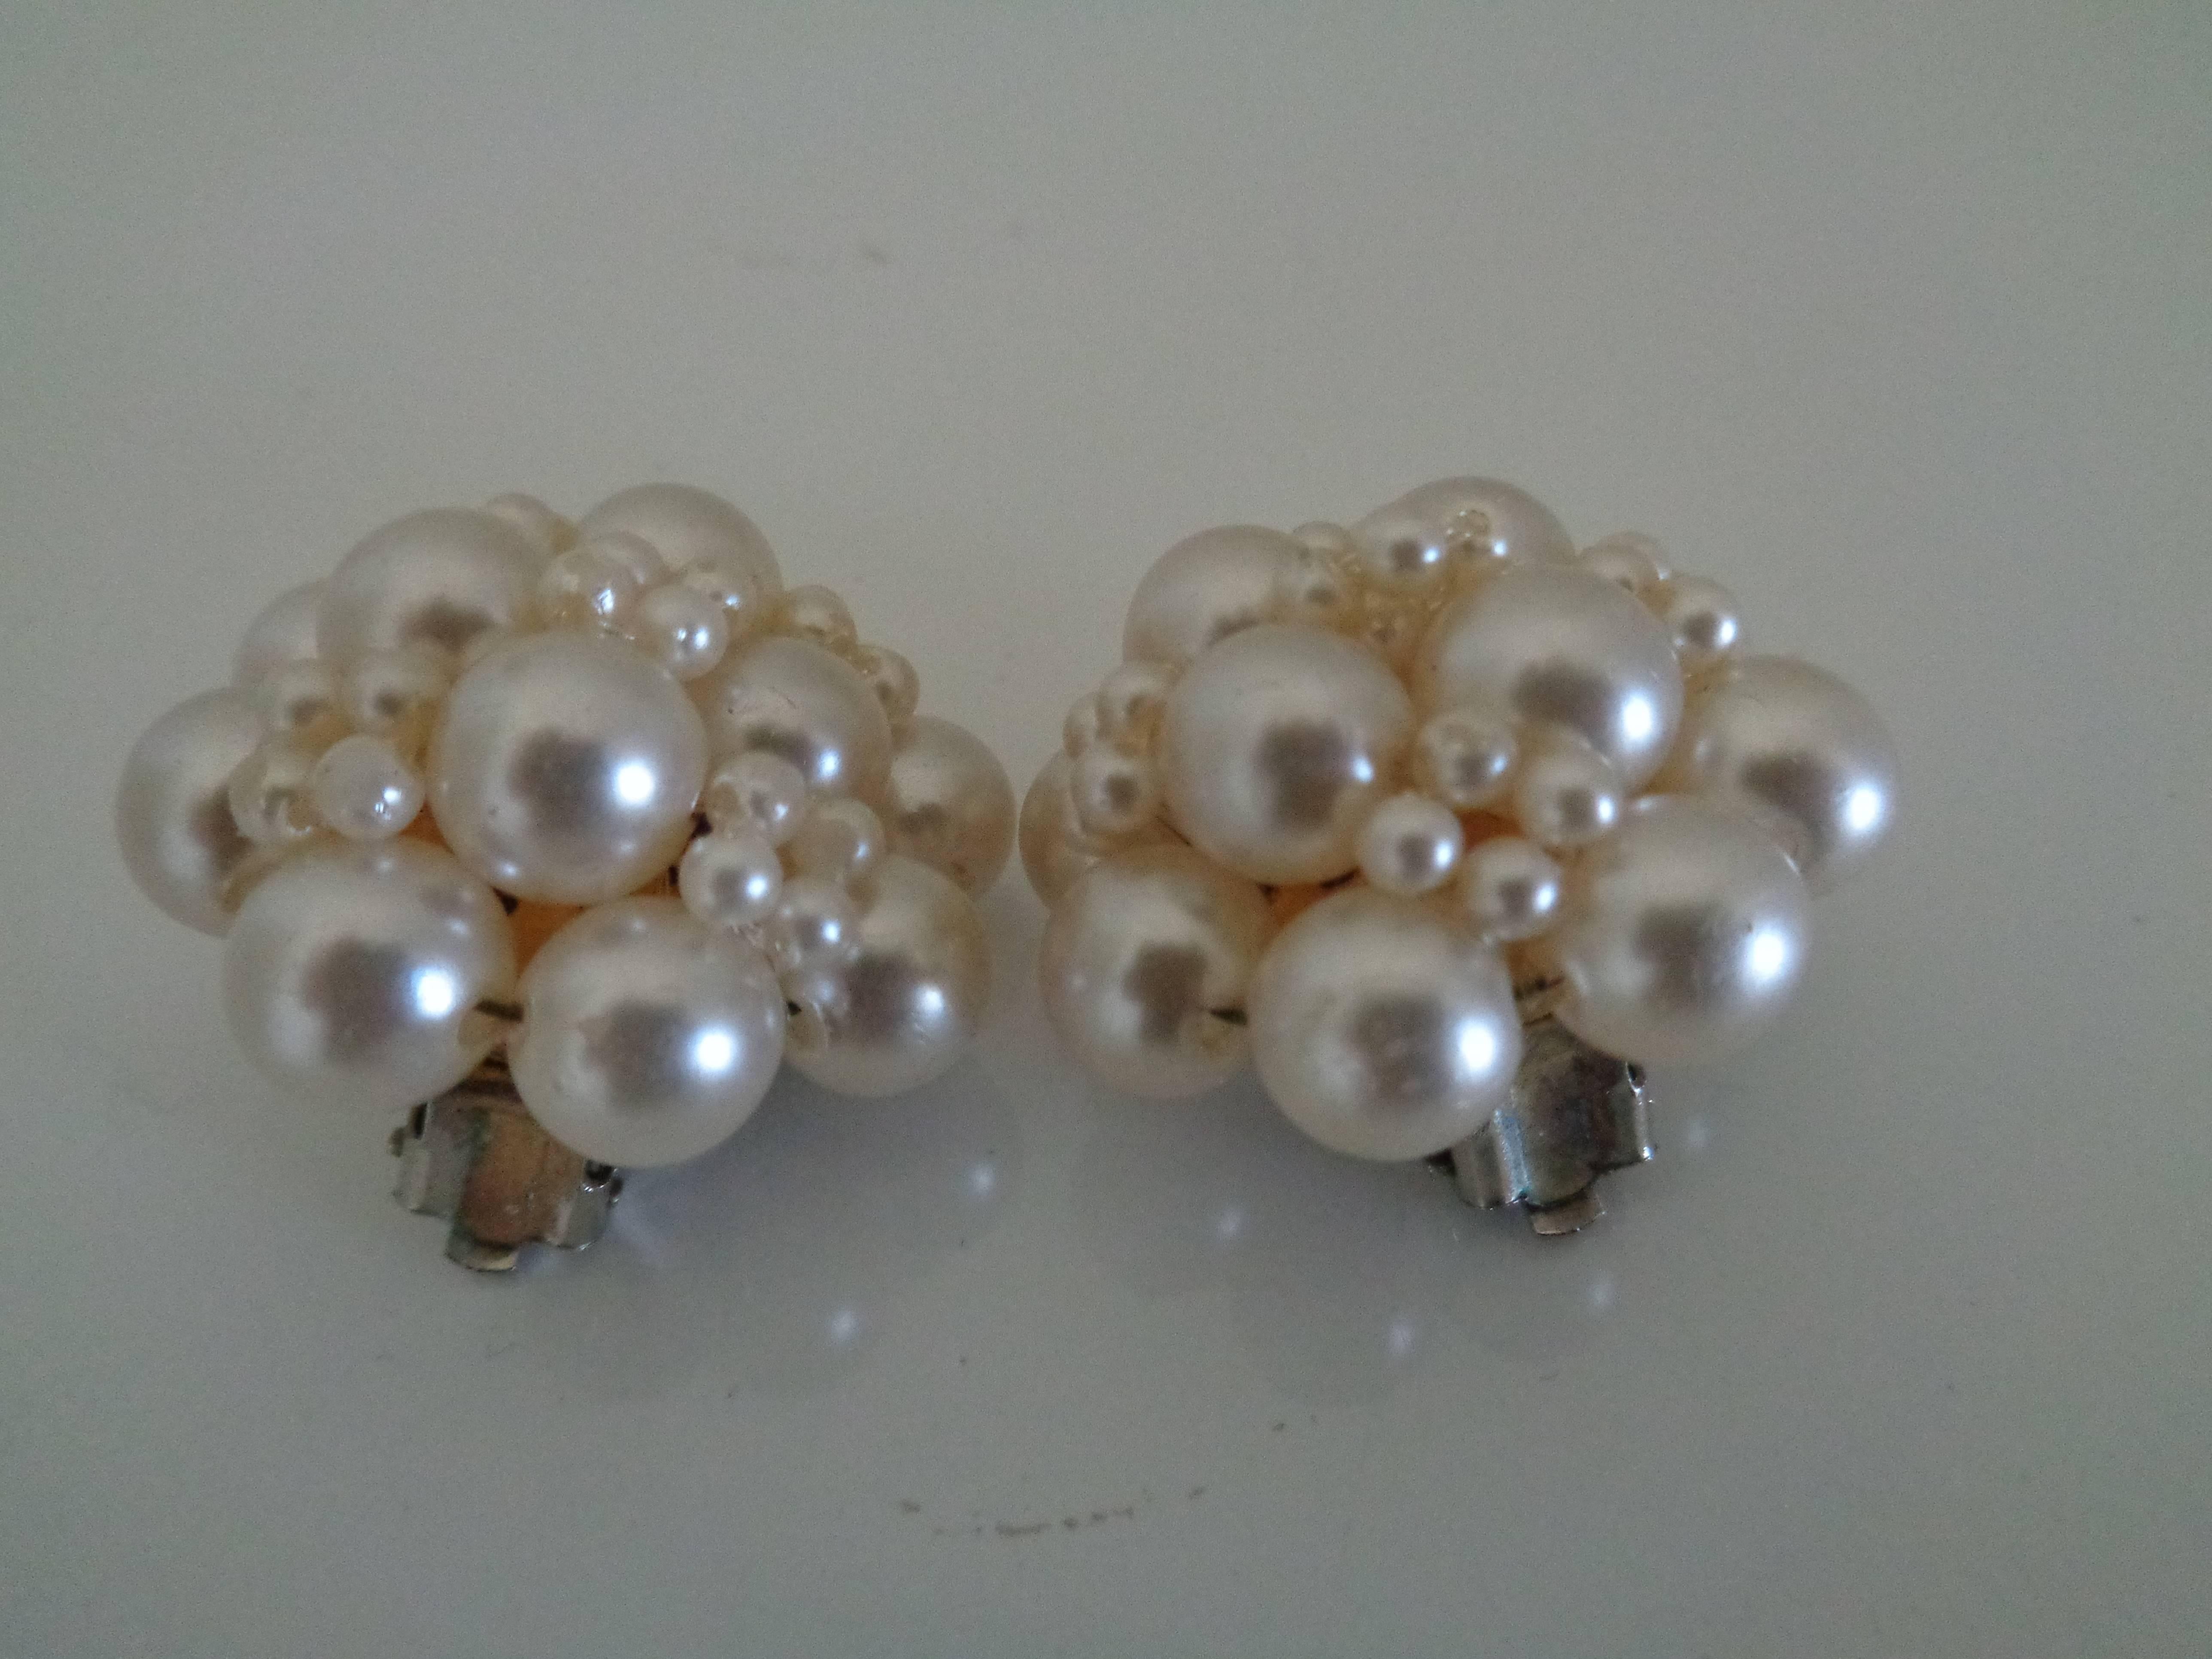 Vintage white faux Pearls Clip on Earrings
measurements : 3 x 3 cm